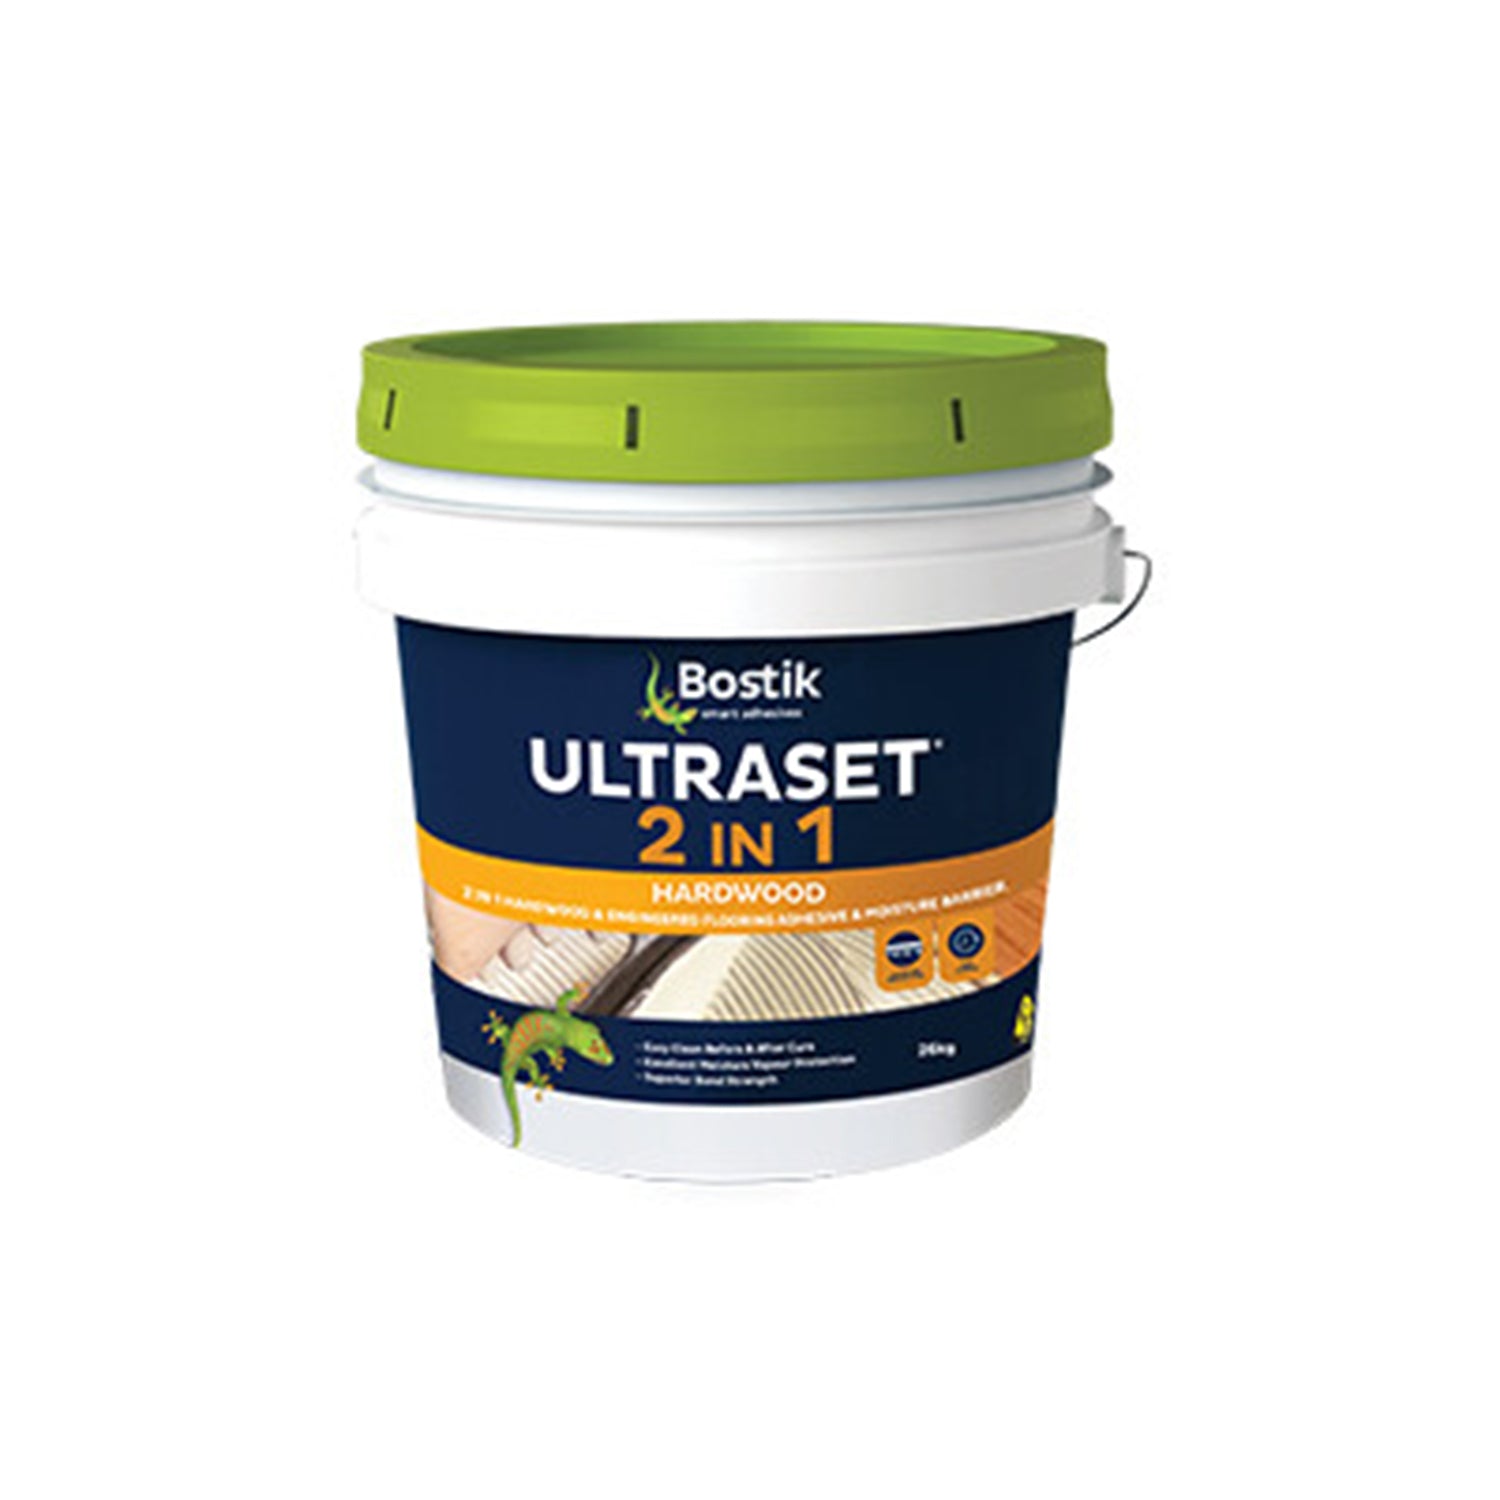 Bostik Ultraset 2in1 Timber Flooring Adhesive